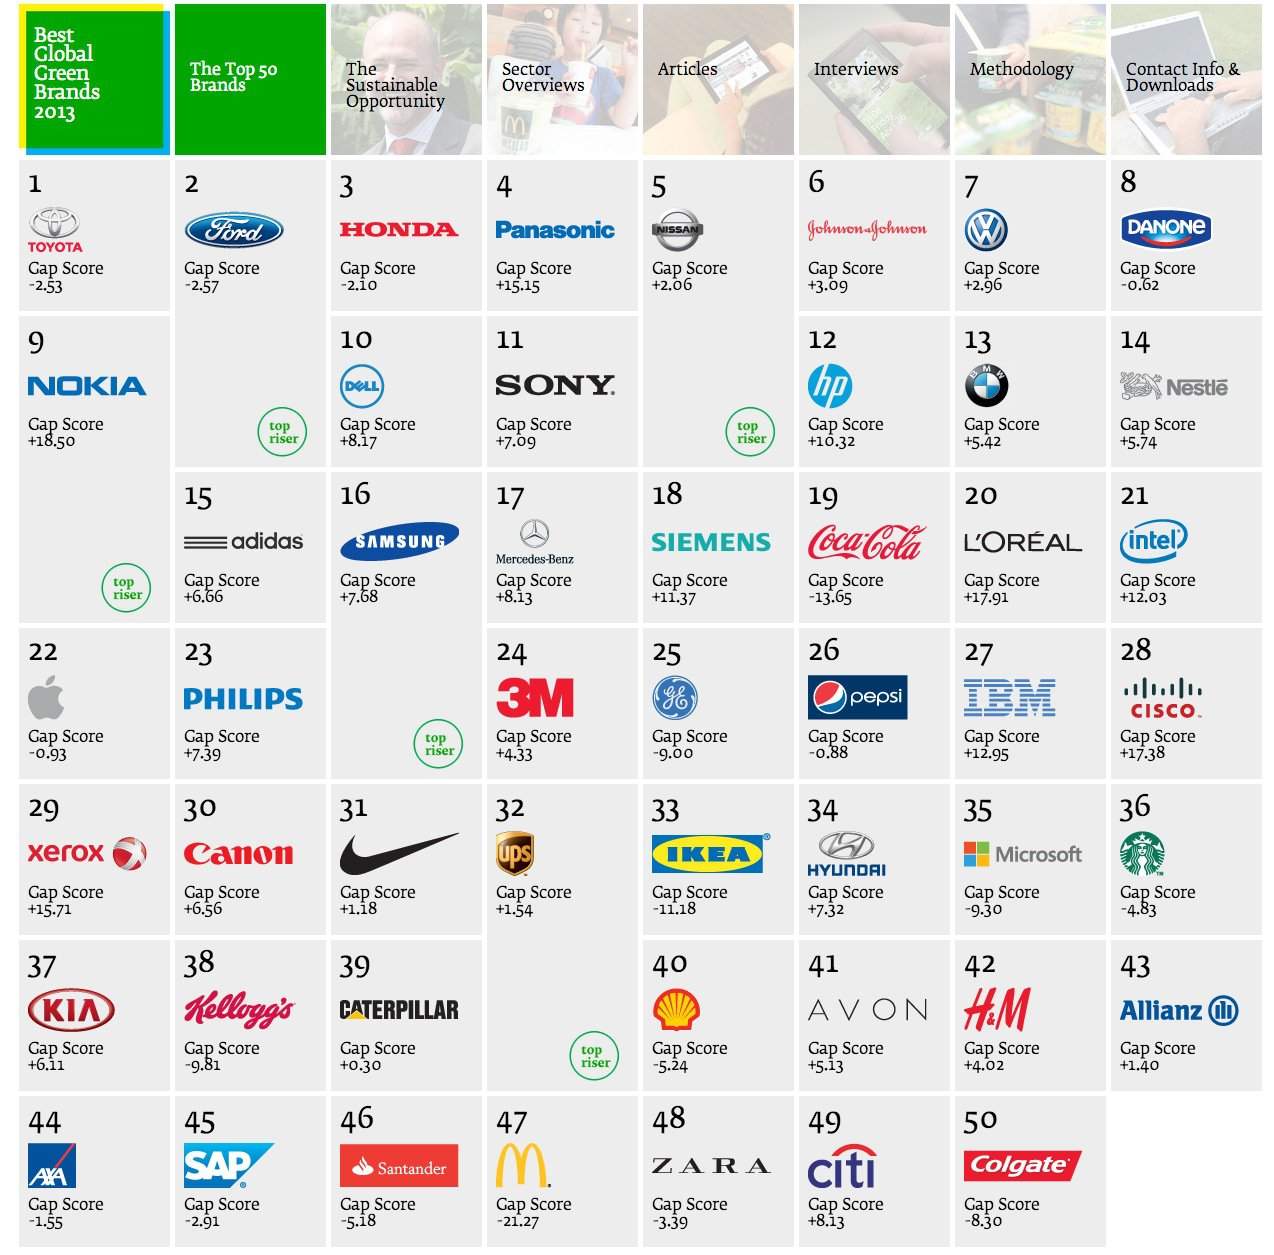 Popular Brands with a Green Logo - Interbrands Top 50 Global Green Brands of 2013